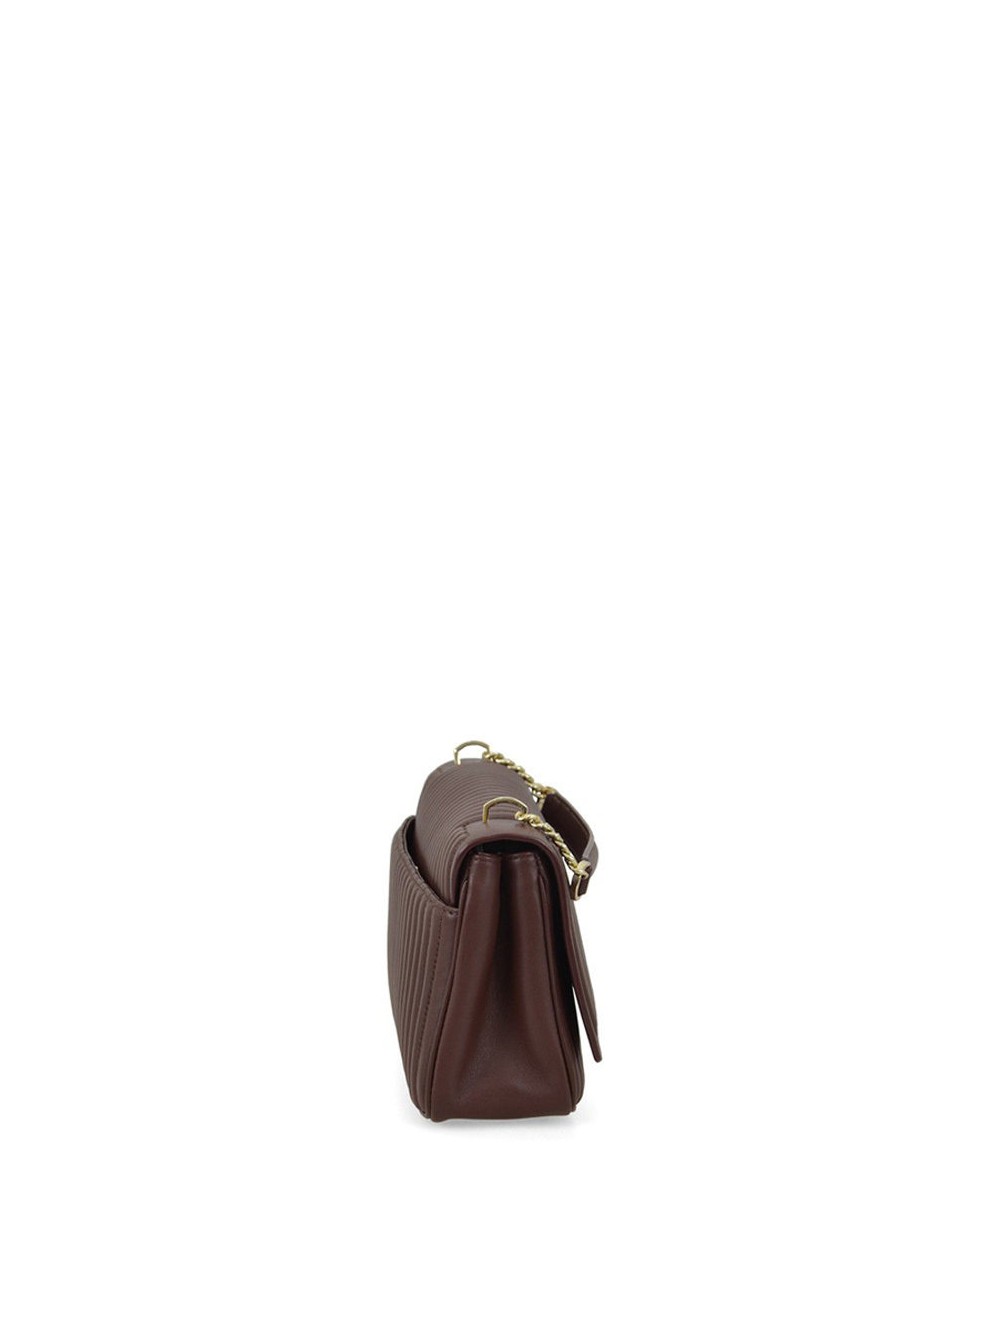 DKNY Donna Karan Purse Shoulder Bag NEW Pleated Black NWT MSRP $108 chain  strap | eBay